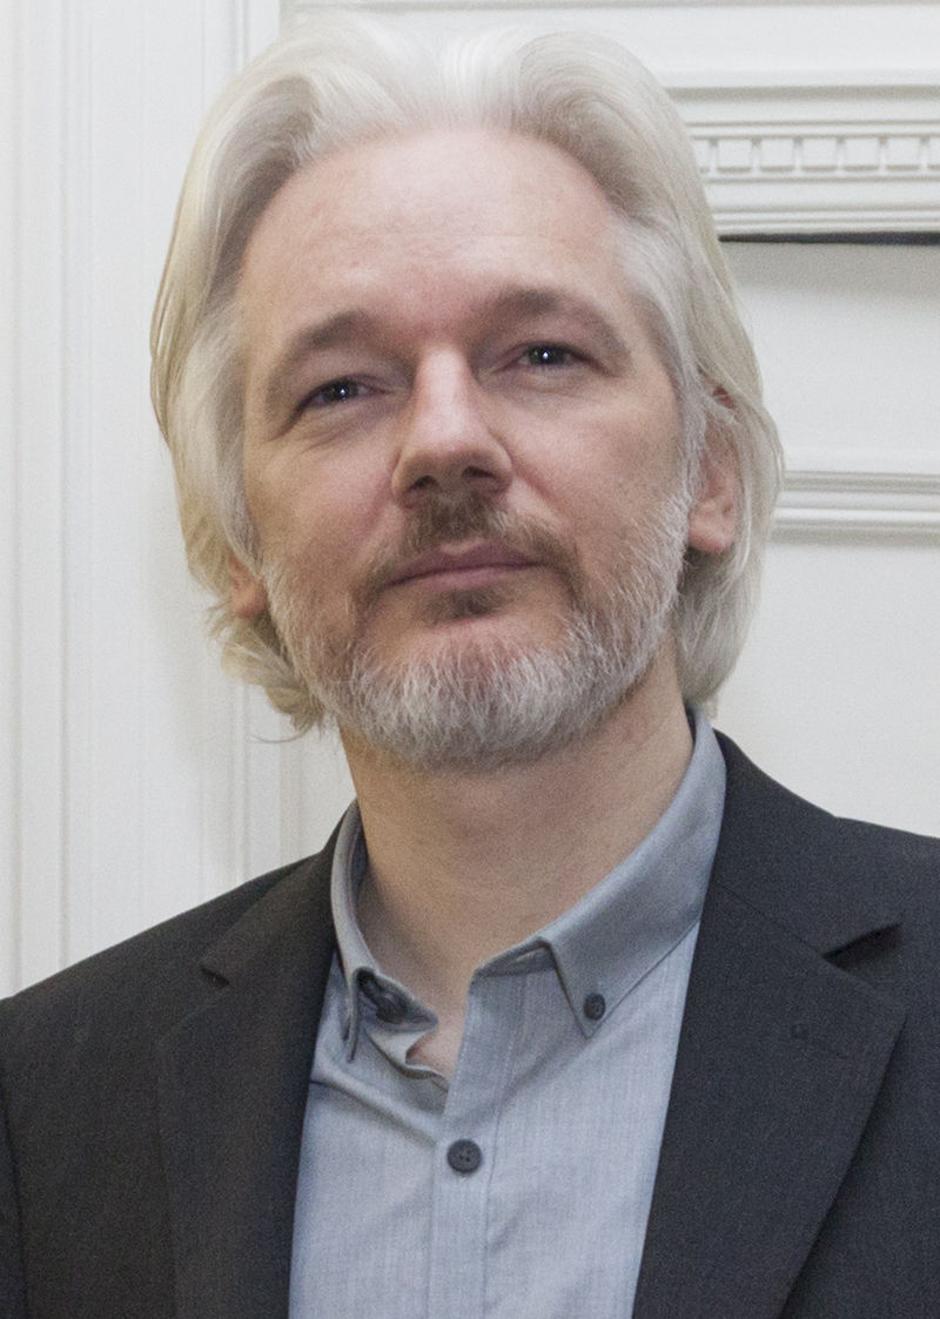 Julian Assange | Author: Wikipedia